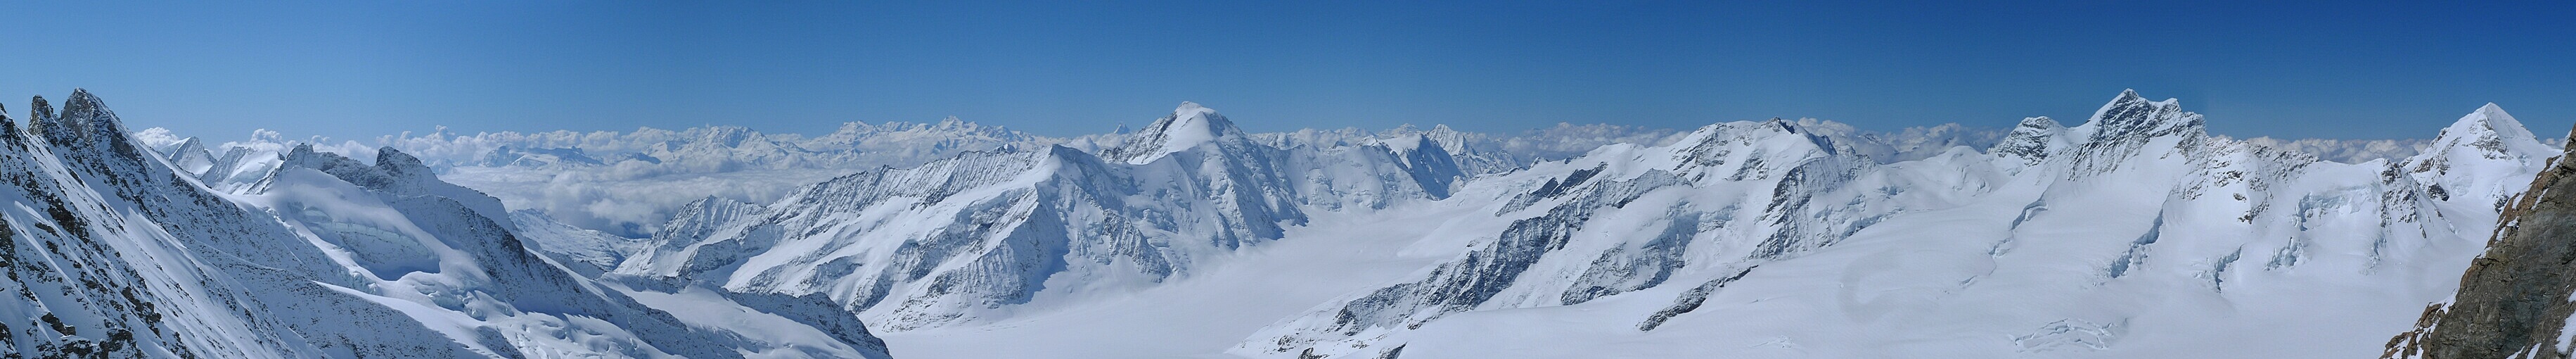 Jungfrau Berner Alpen / Alpes bernoises Švýcarsko panorama 21